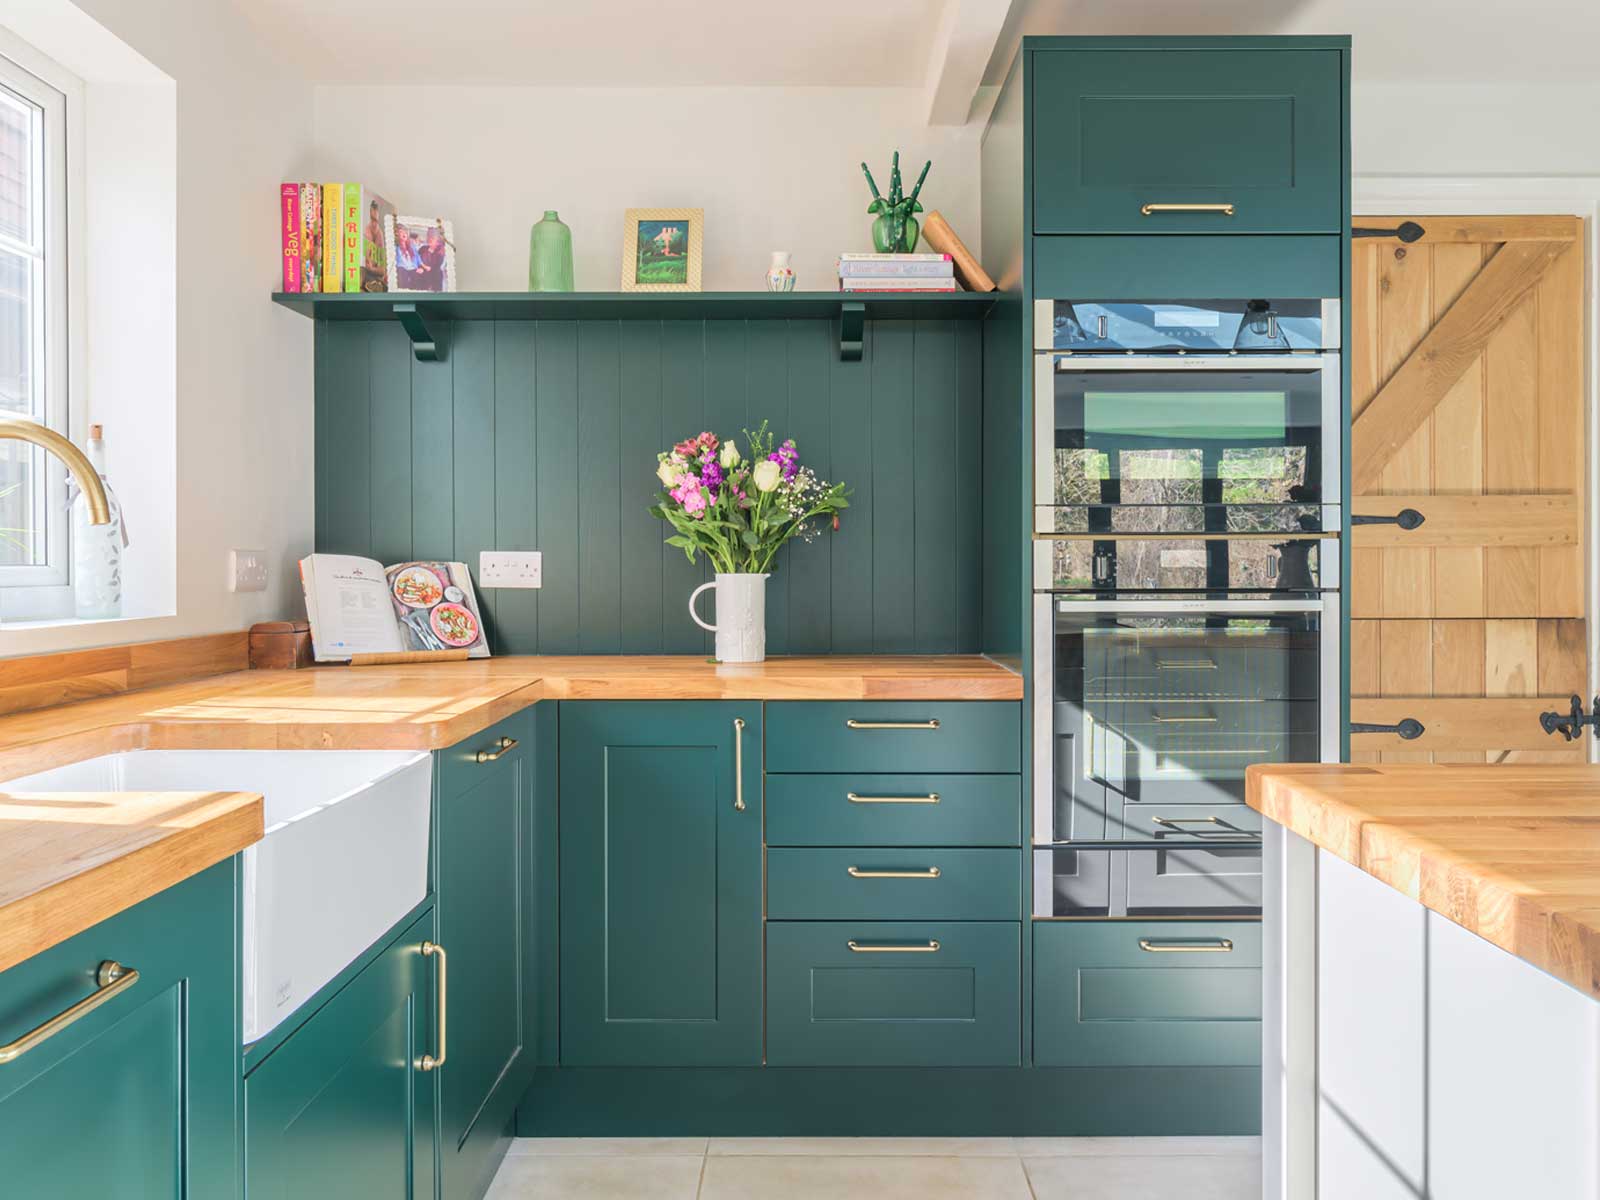 Kitschy kitchen with dark green kitchen paint and eclectic kitchen décor